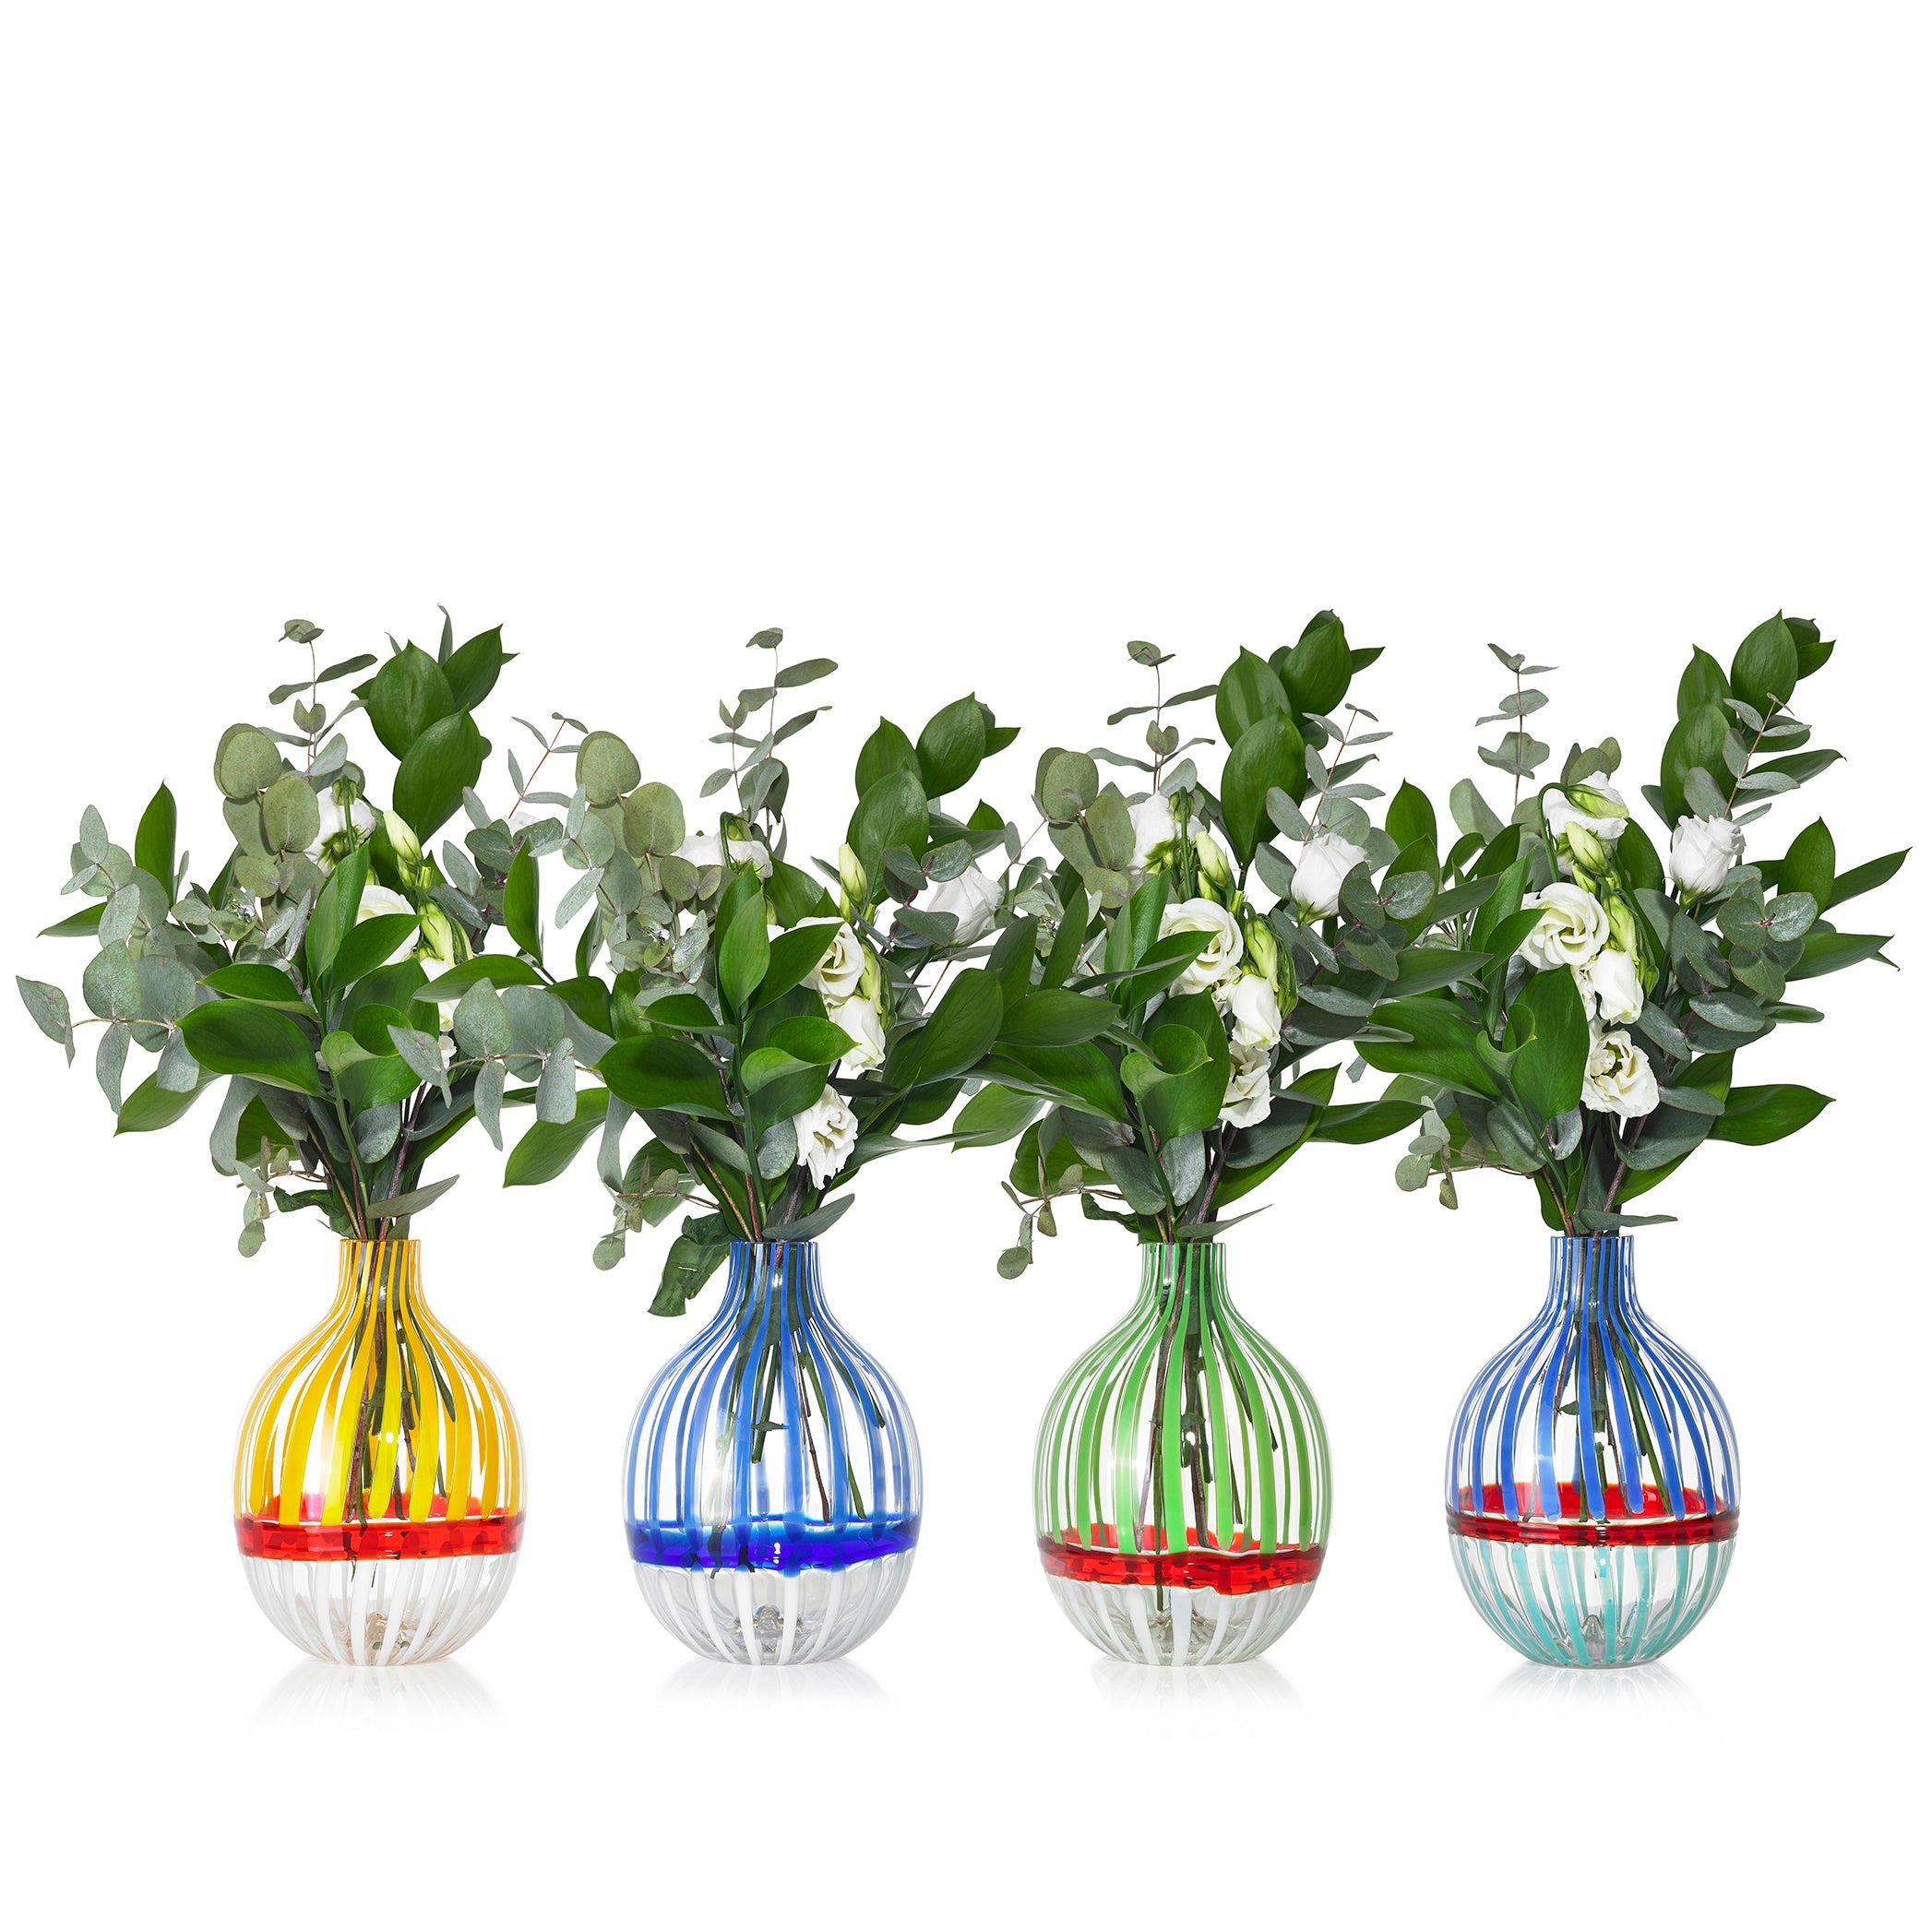 Handblown Double Stripe Glass Vase in Avocado Green, Red & White, 18cm